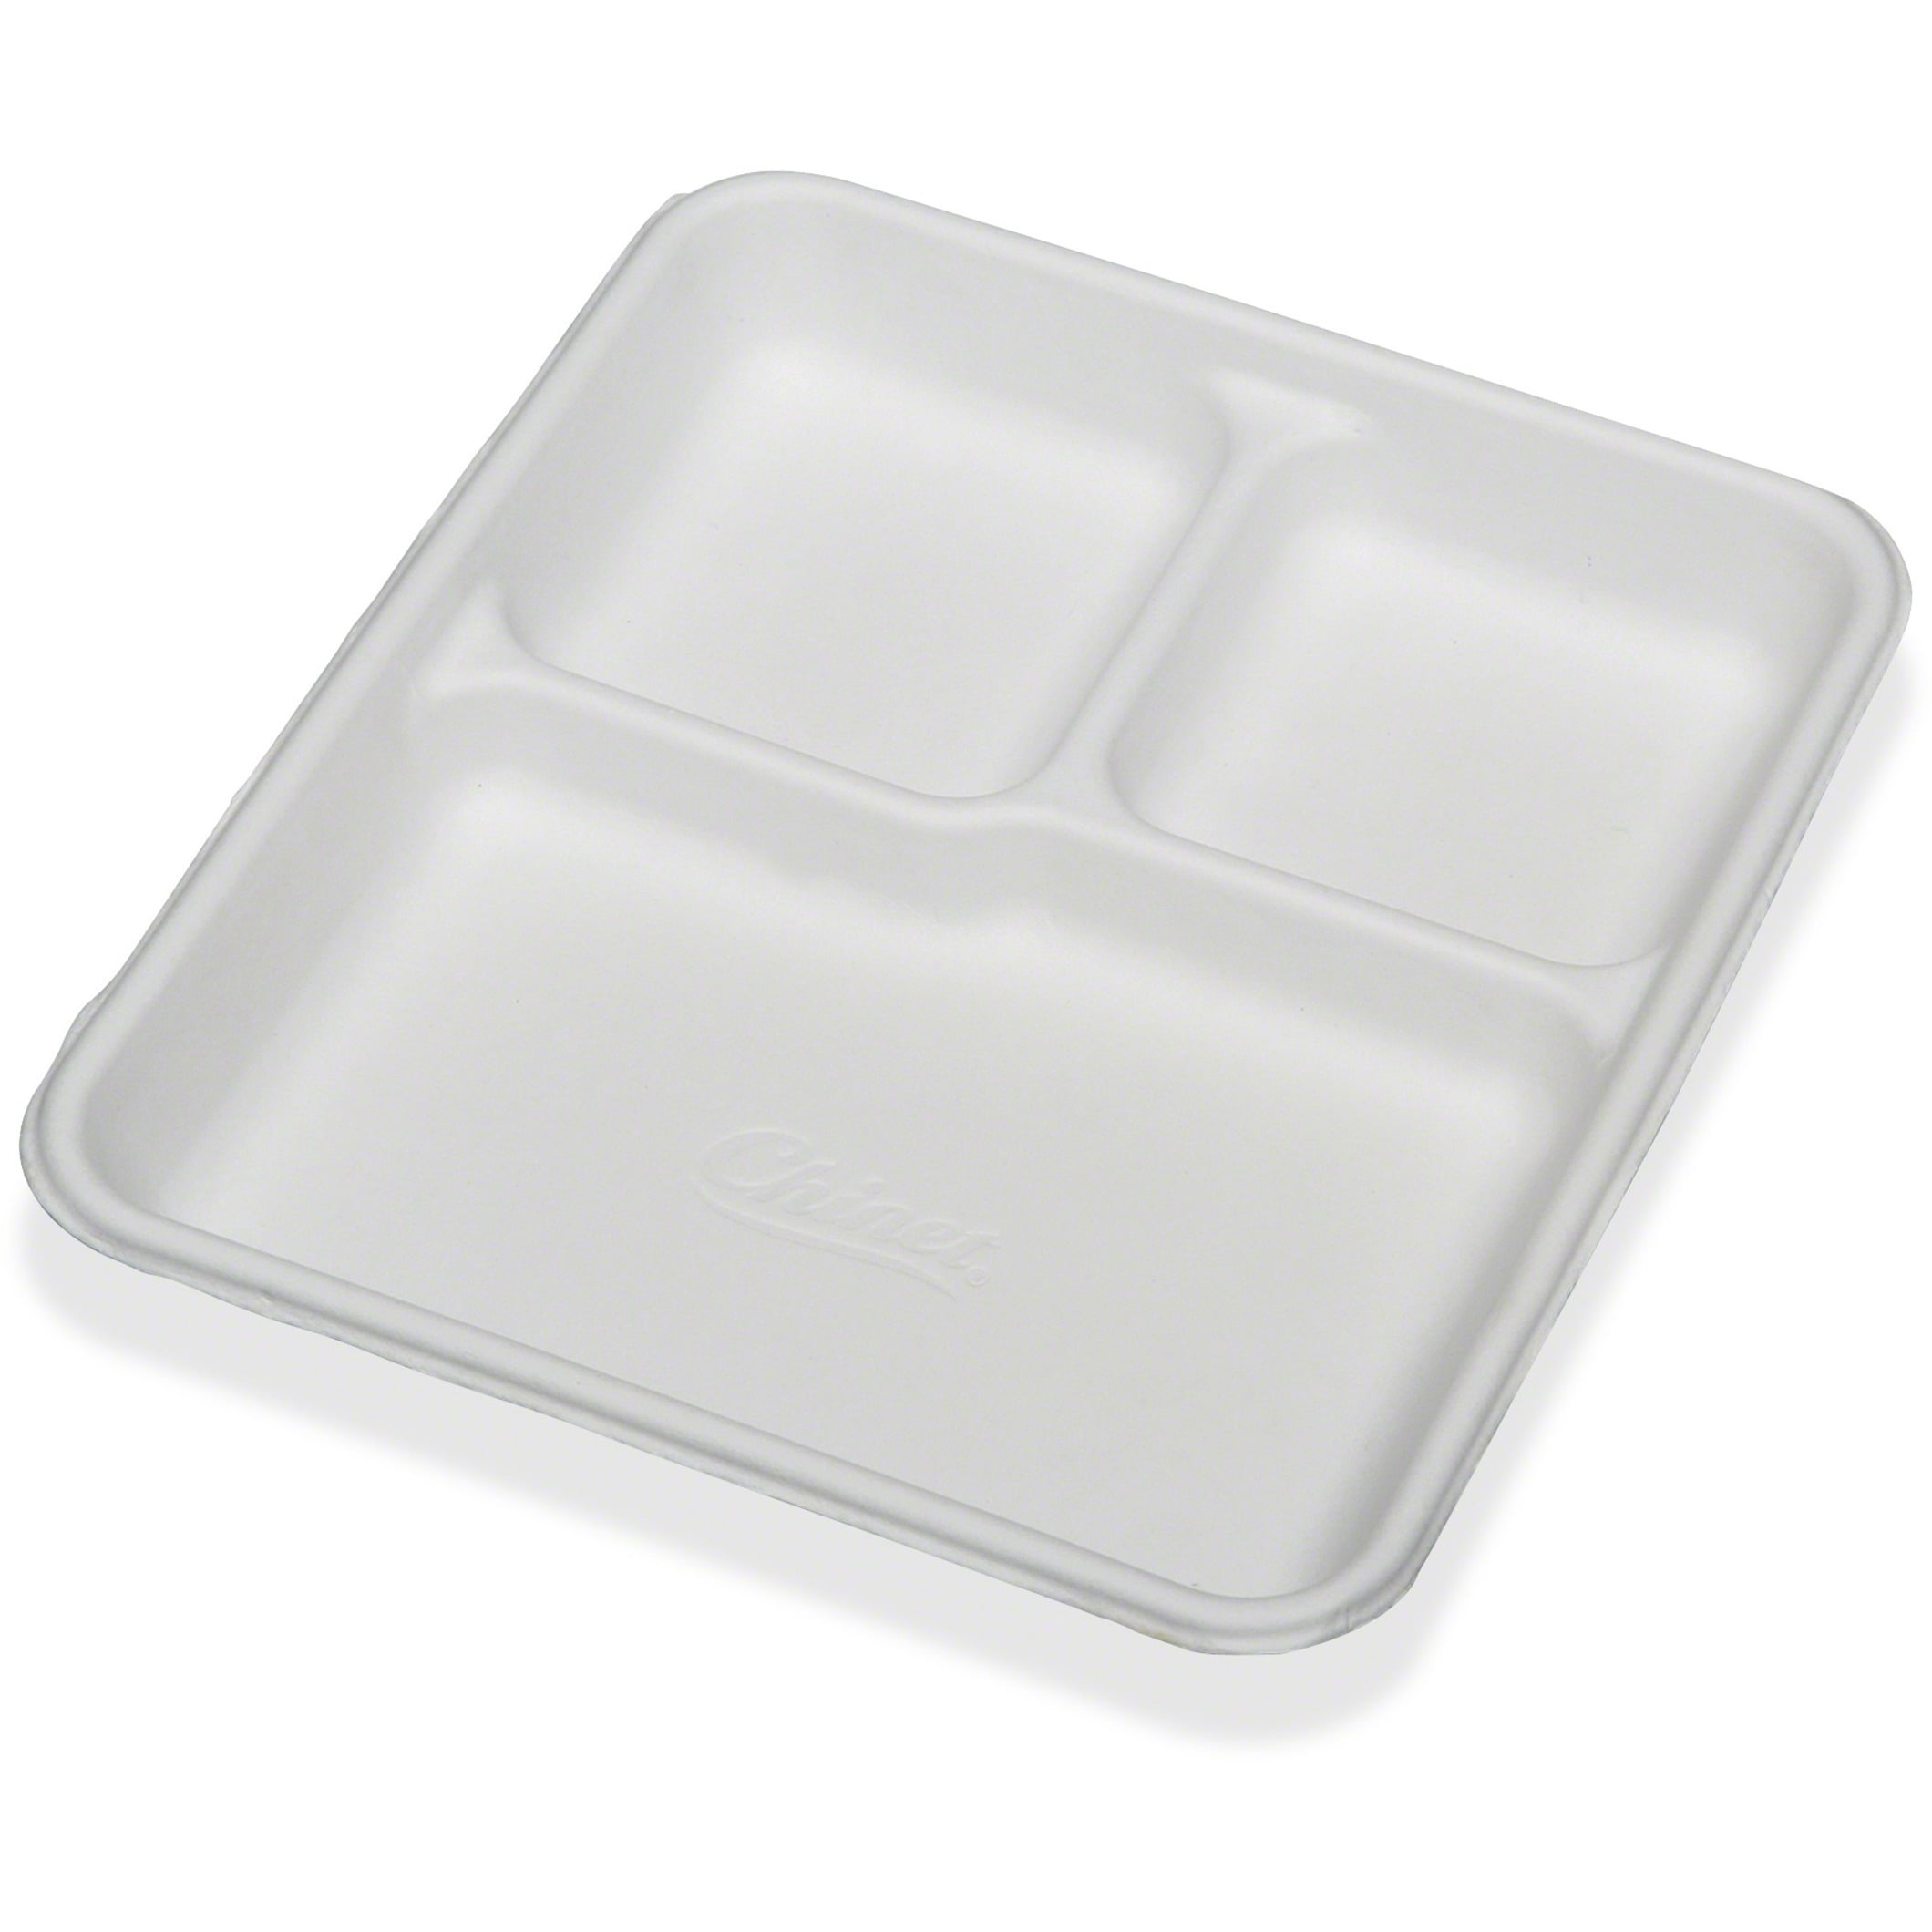 15PK White Form Plates 23 CM 9 Inch Foam Plates Disposable Polystyrene  Plates 5055706602923